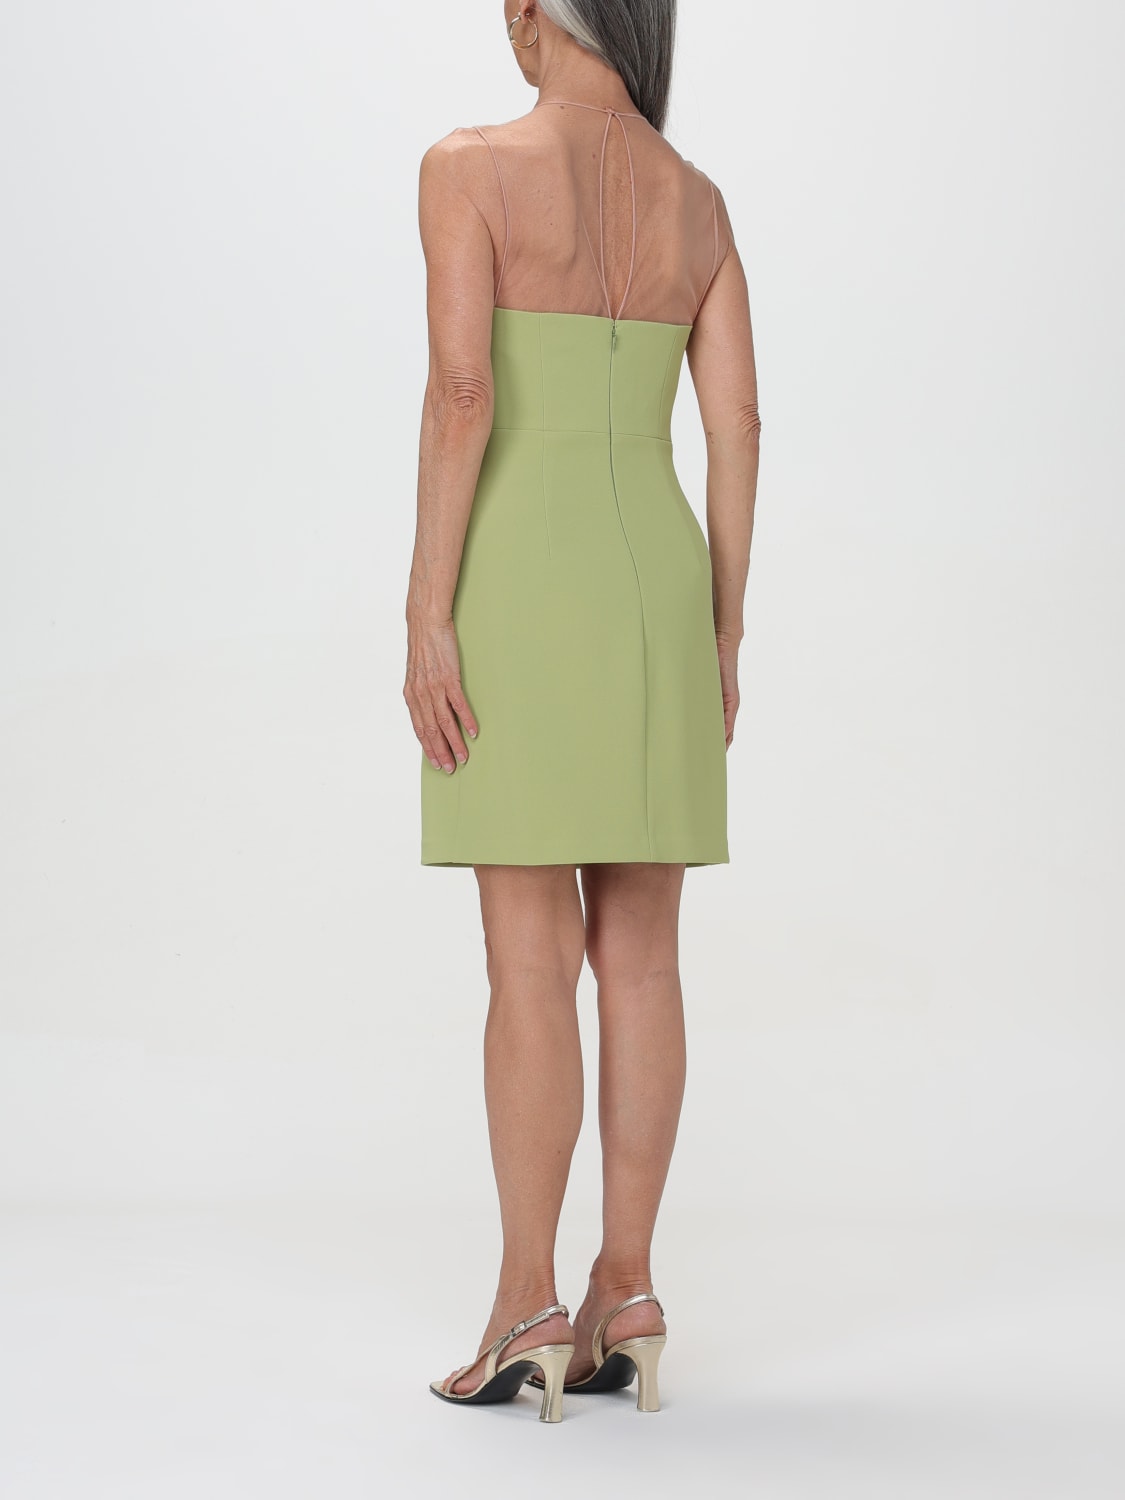 Women's sheath dresses outlet by Elisabetta Franchi: buy online